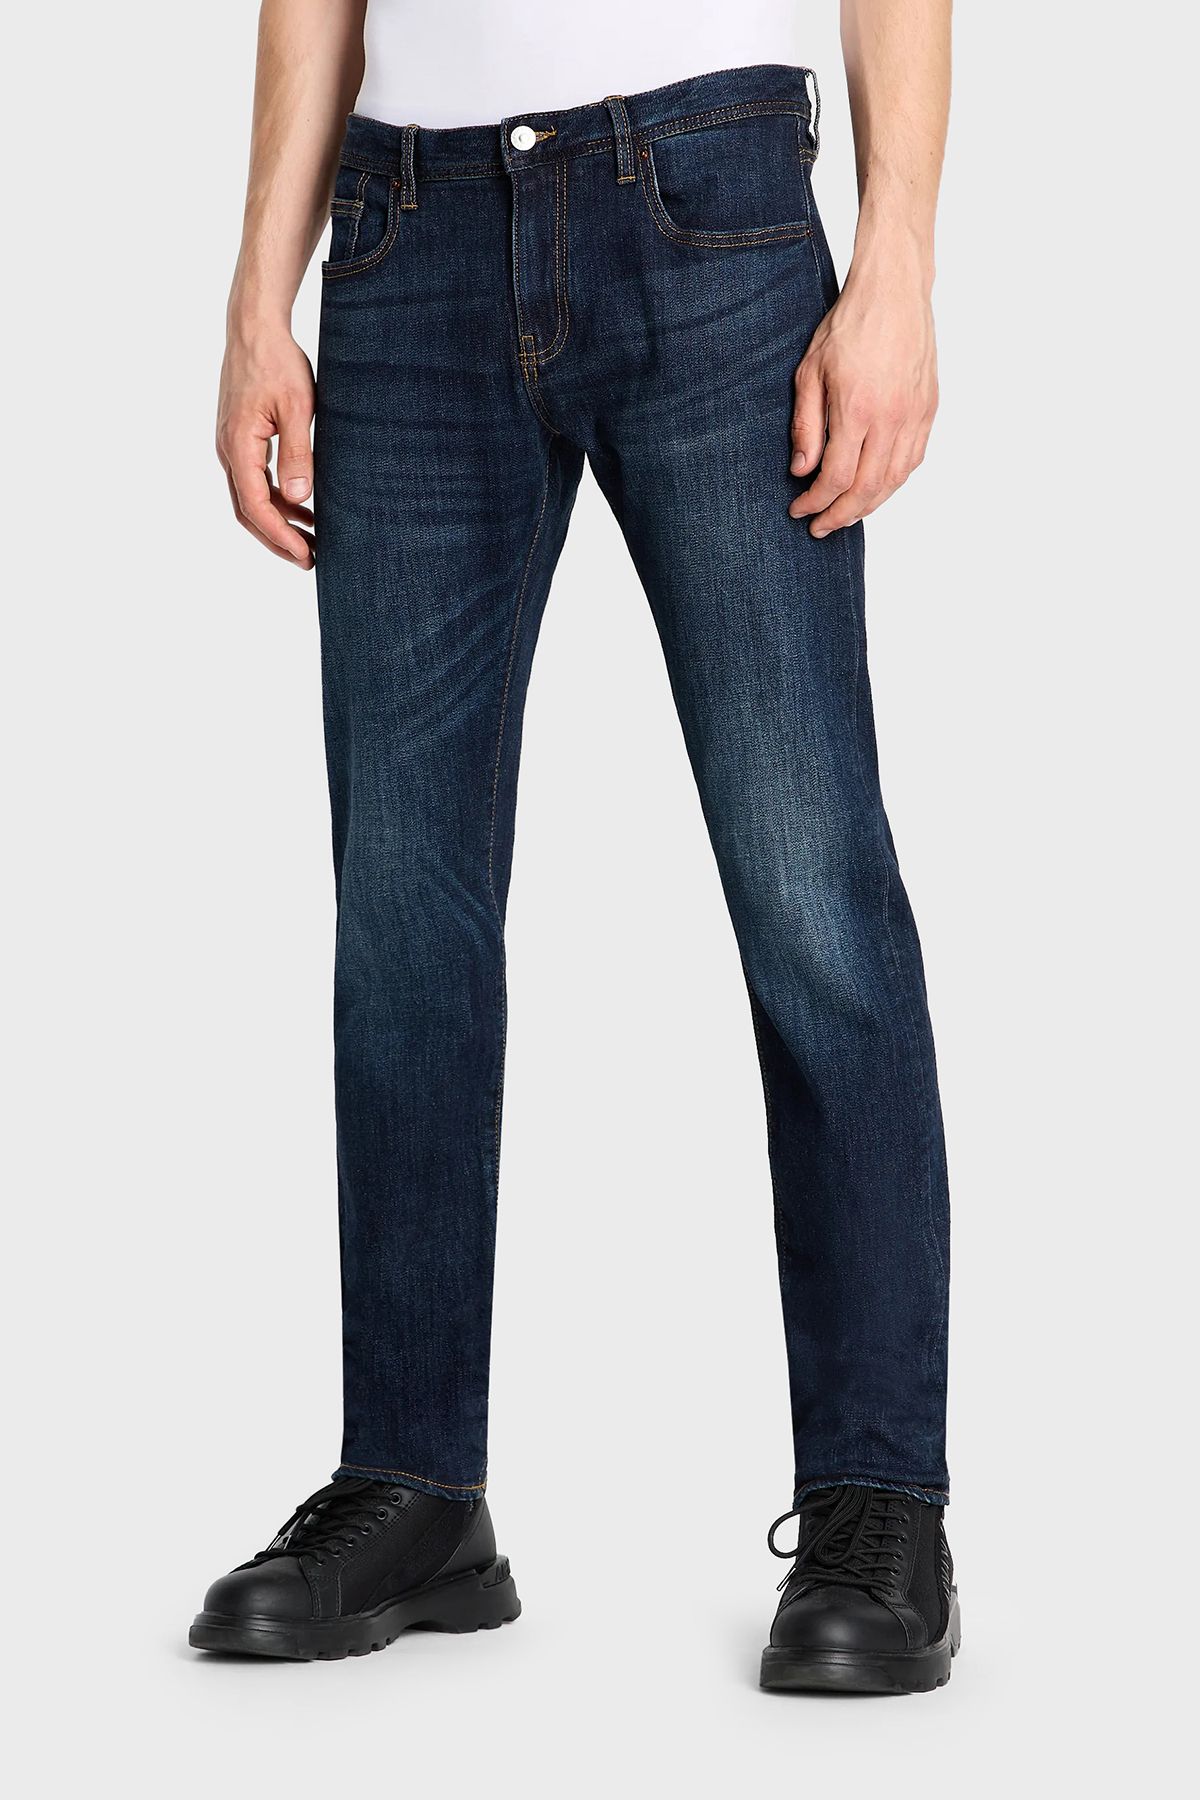 Armani Exchange J13 Düşük Bel Dar Paça Slim Fit Jeans Erkek KOT PANTOLON 6RZJ13 Z18FZ 1500